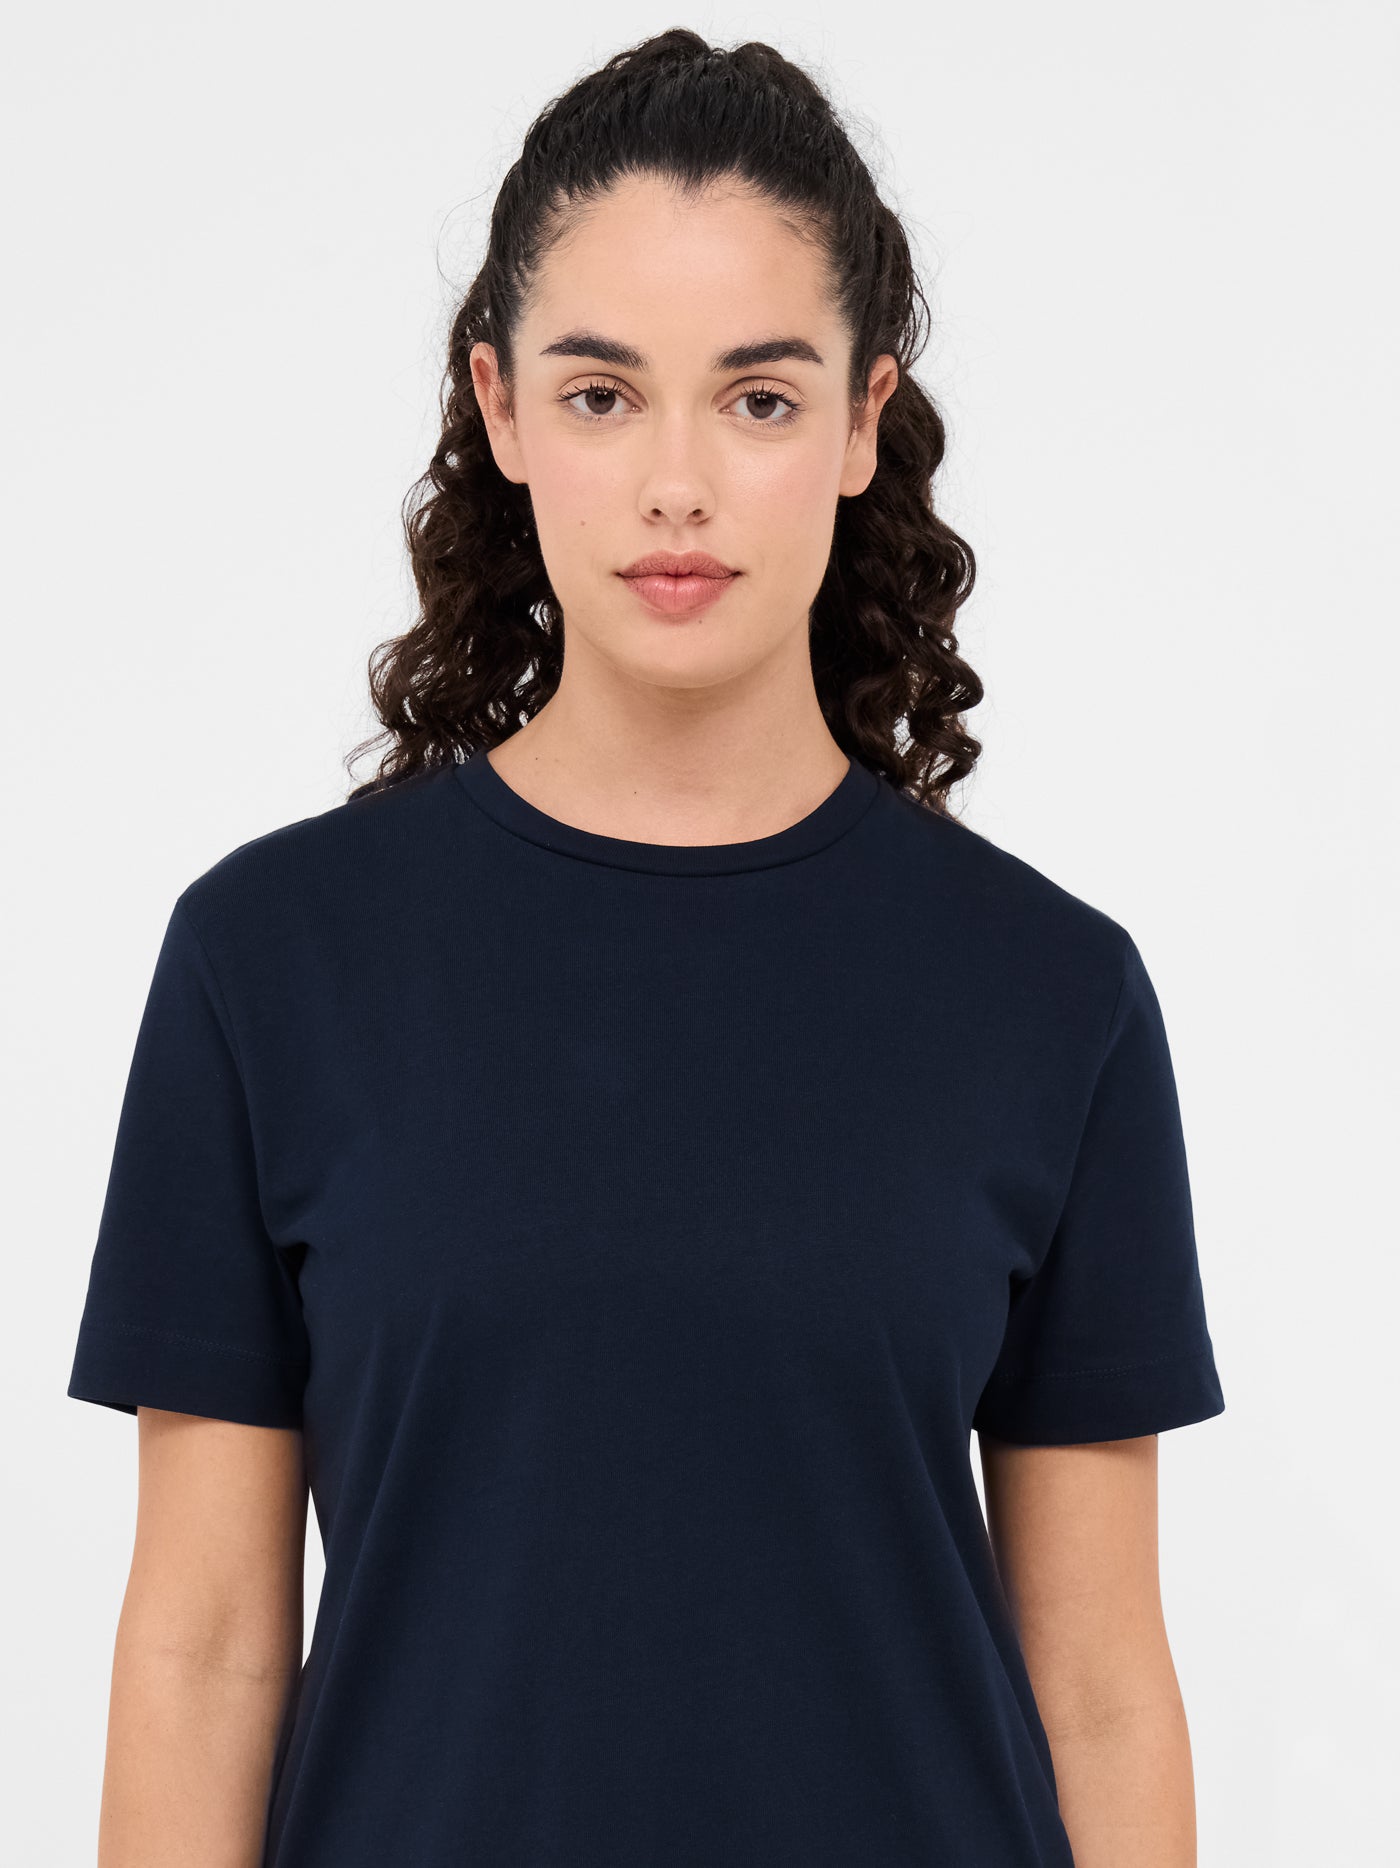 Camiseta azul marino Barça - Mujer